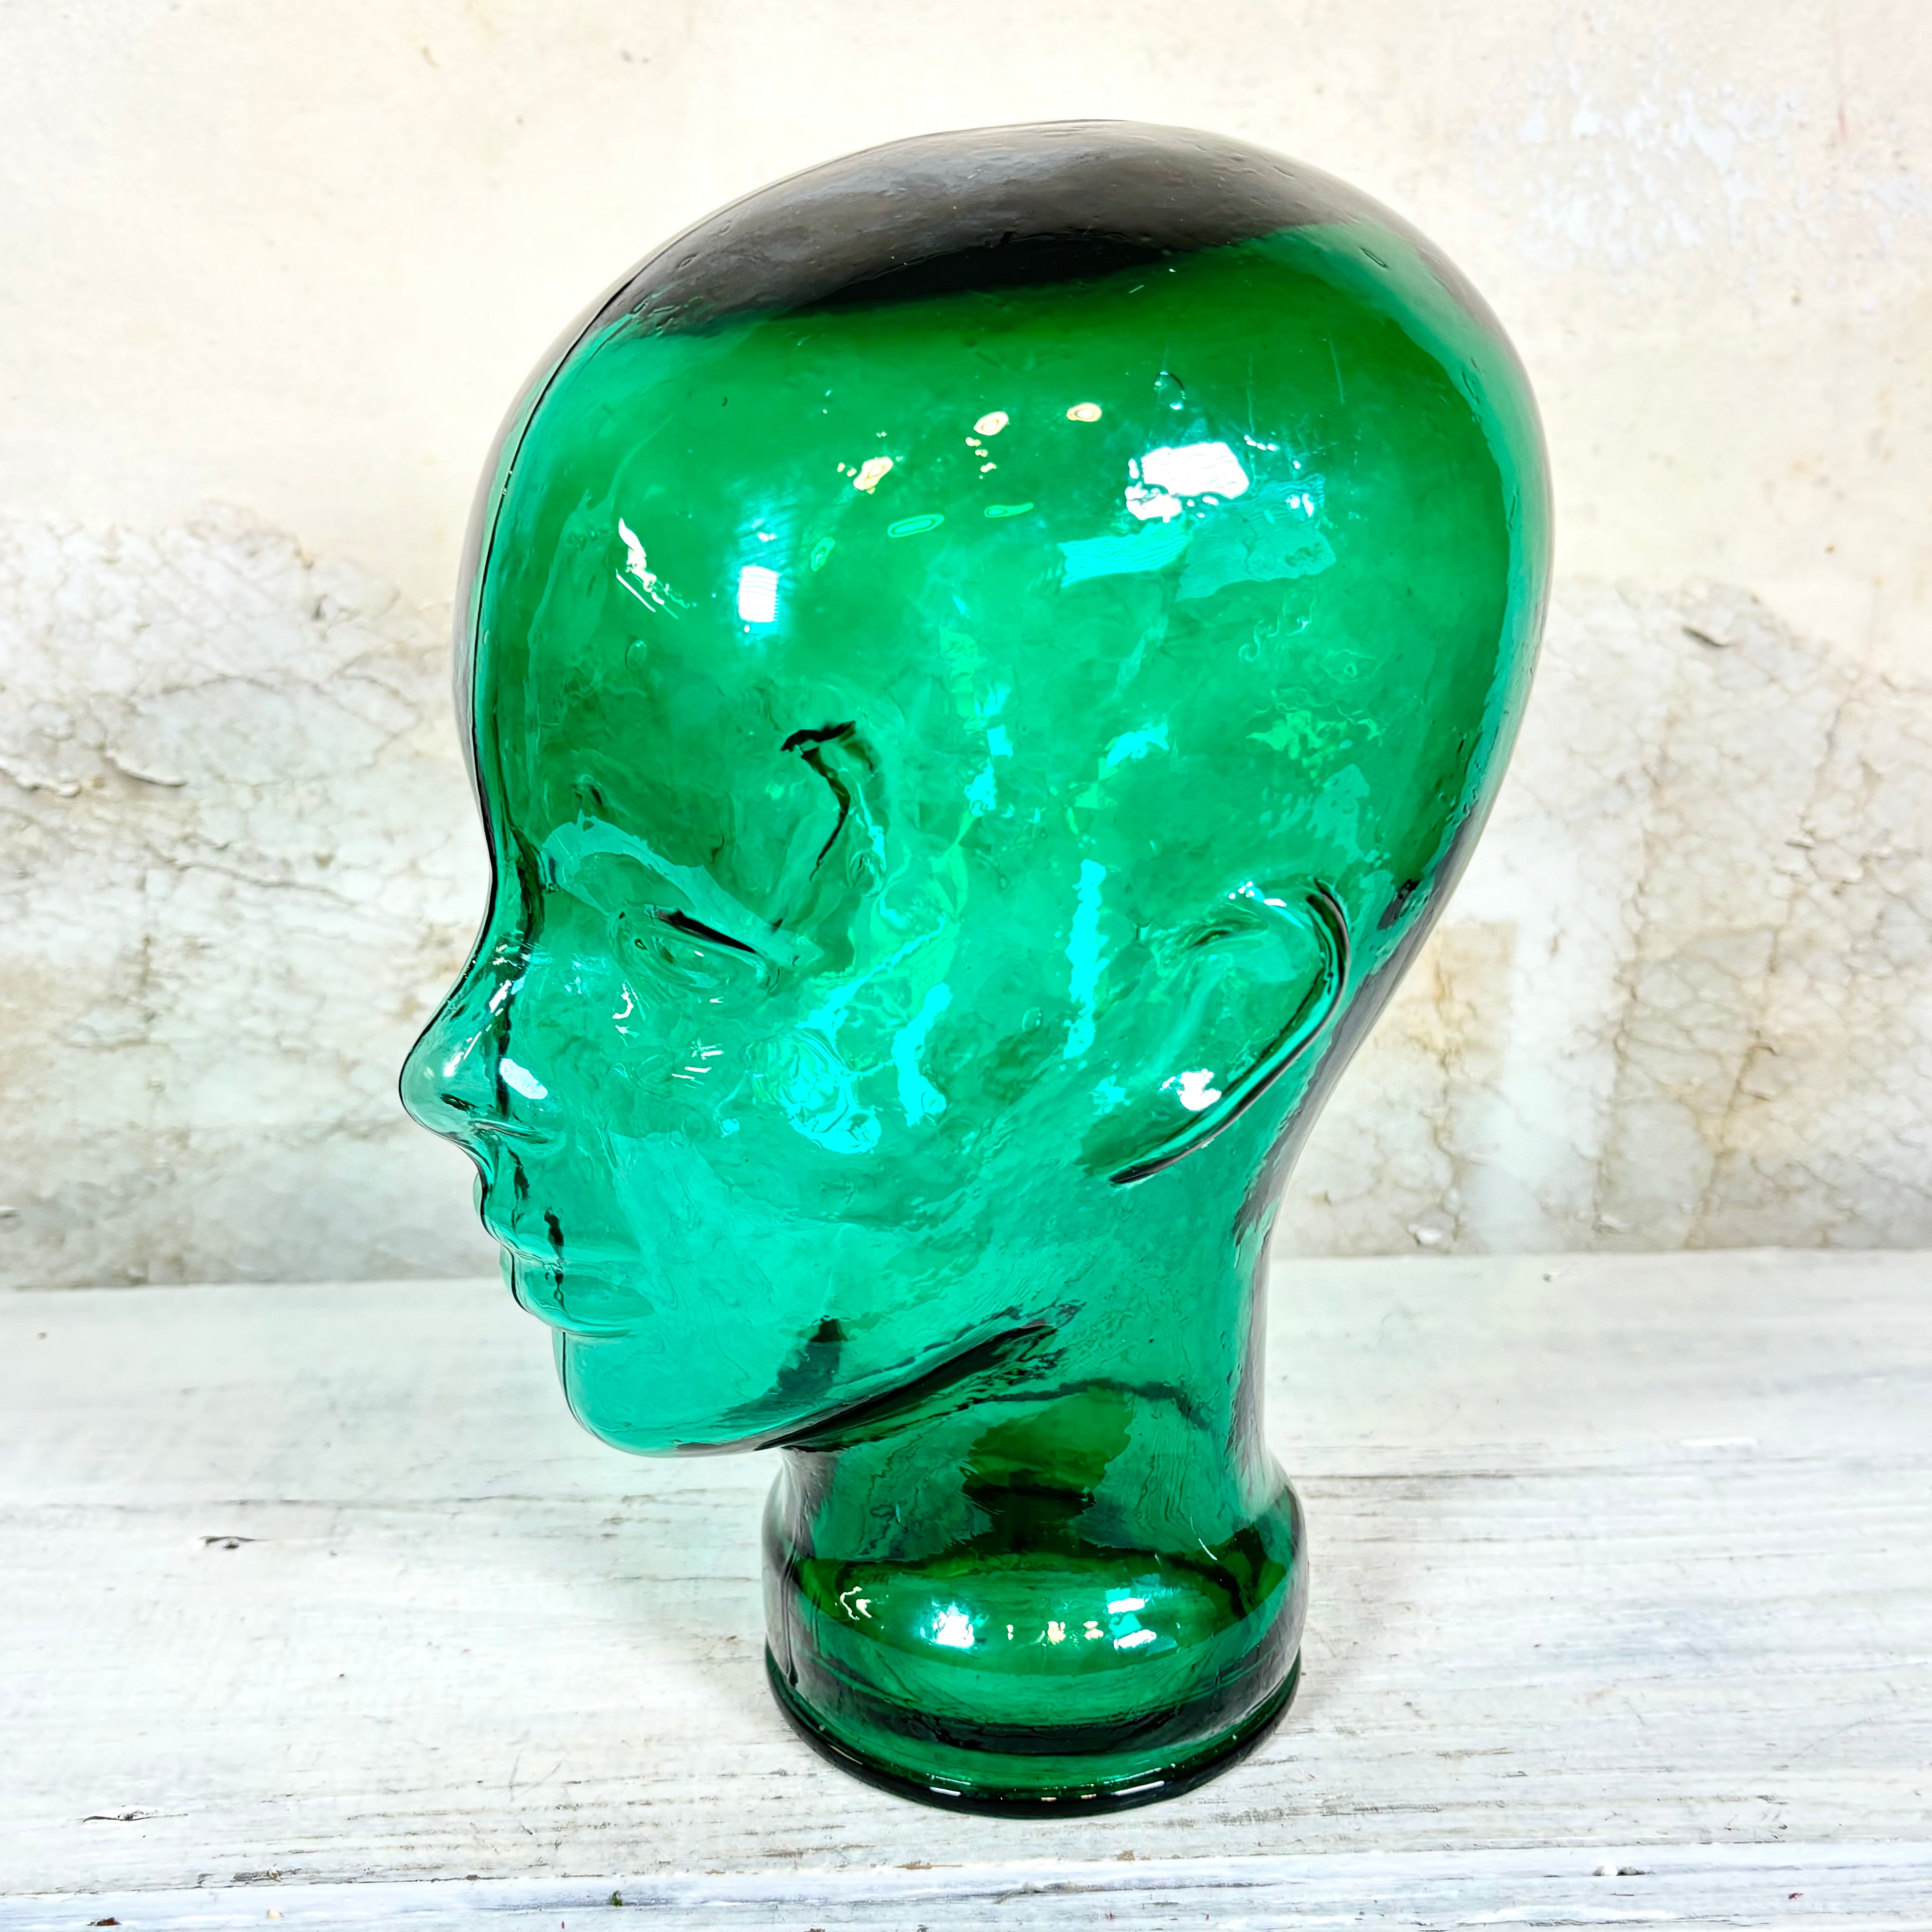 Vintage 1970s Green Glass Mannequin Head